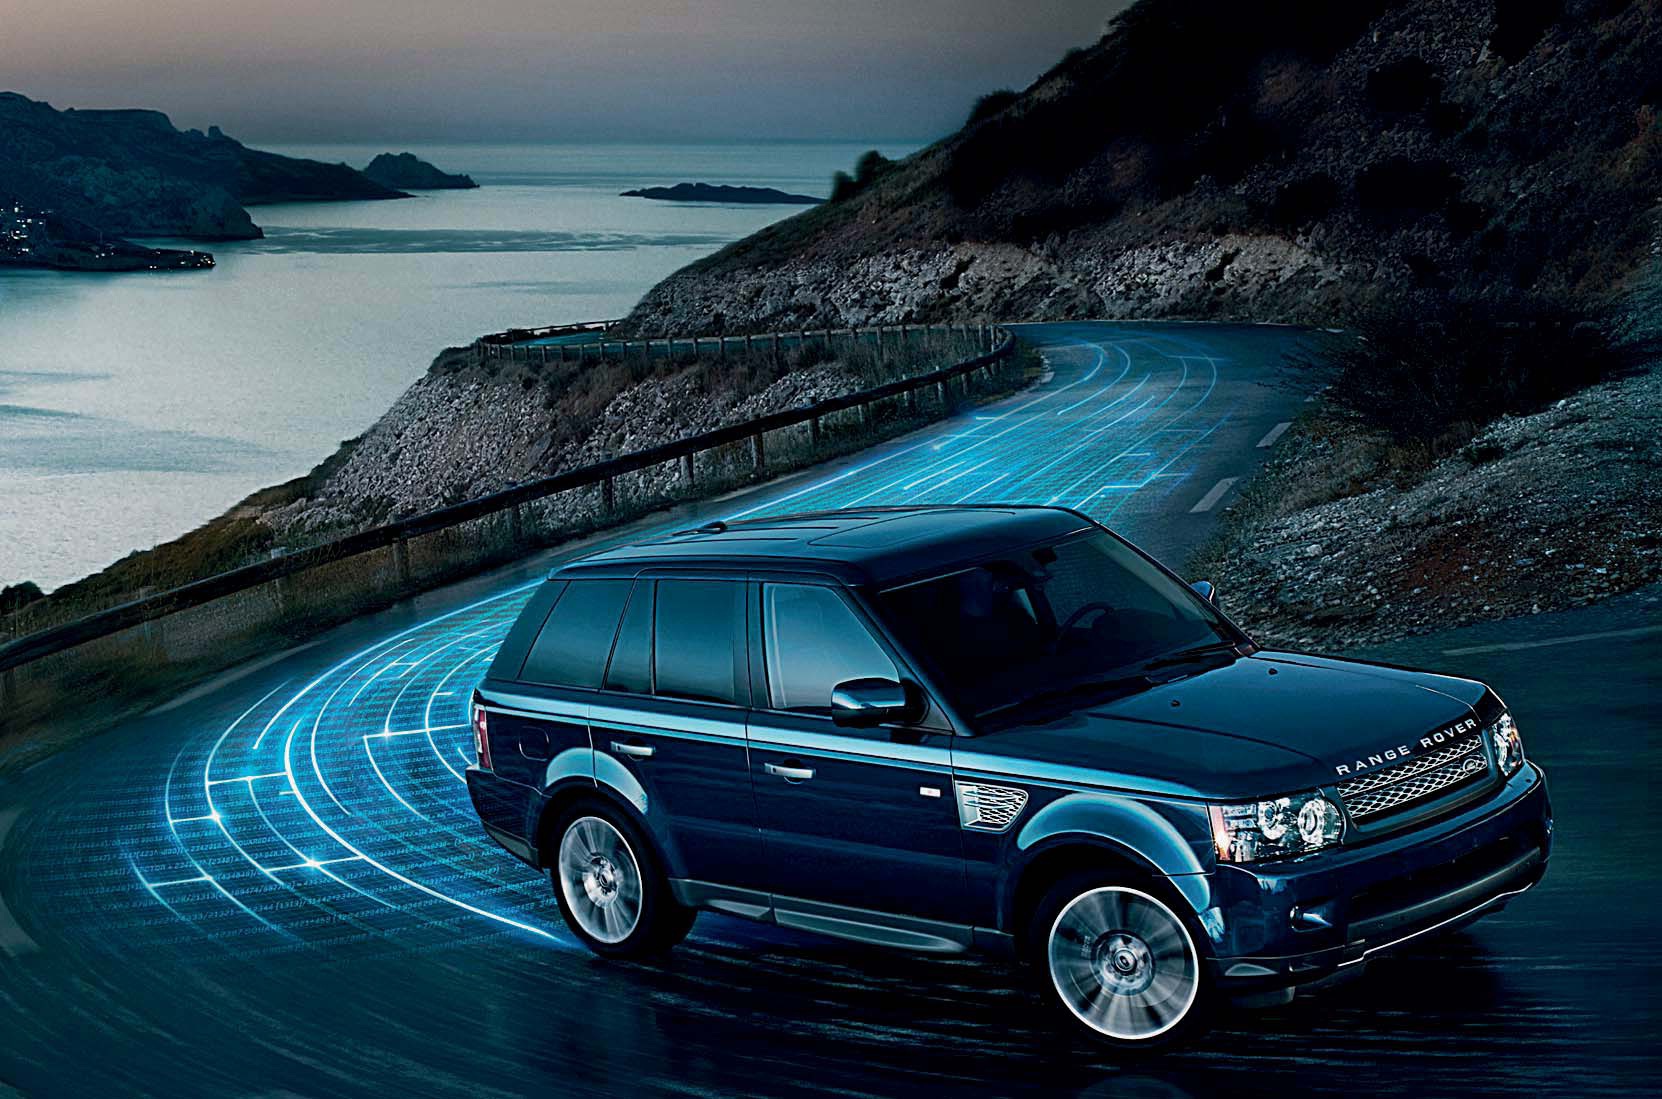 2010 Range Rover Sport - HD Wallpaper 